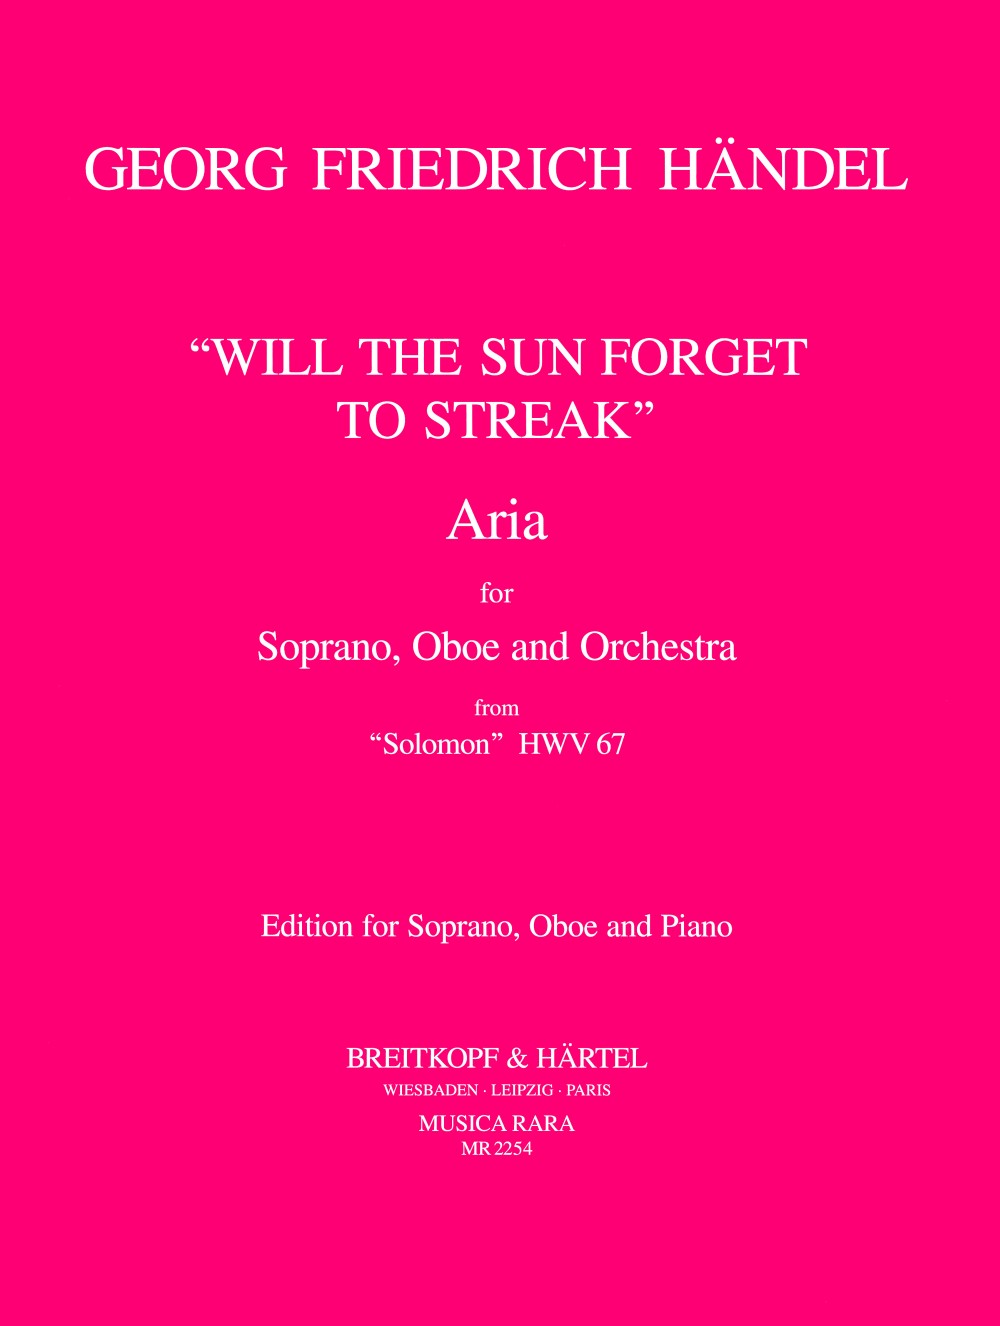 Handel: Will the sun forget to streak (Aria)